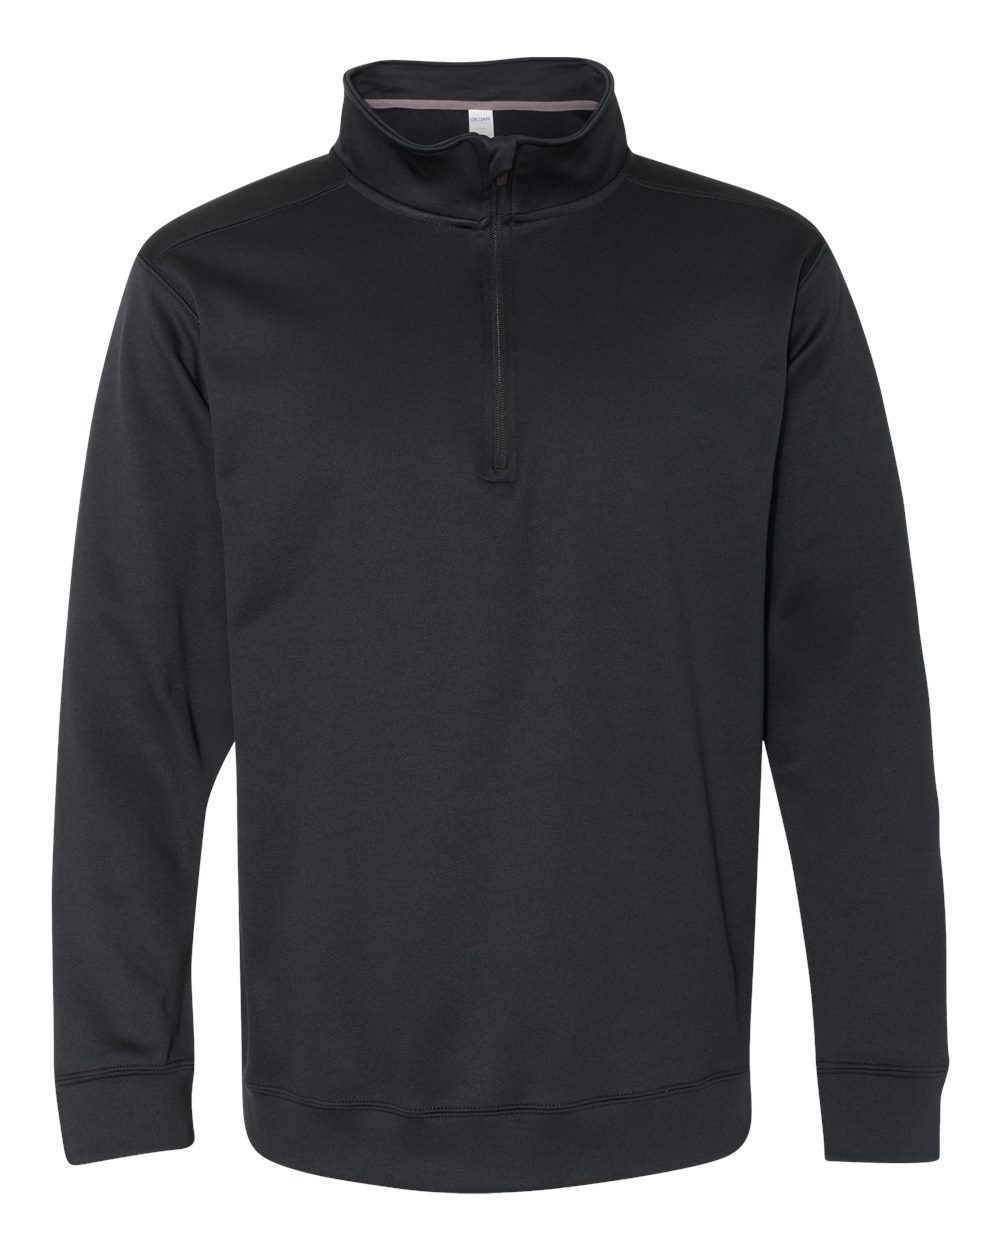 Gildan 99800 - Performance® Tech Quarter-Zip Sweatshirt